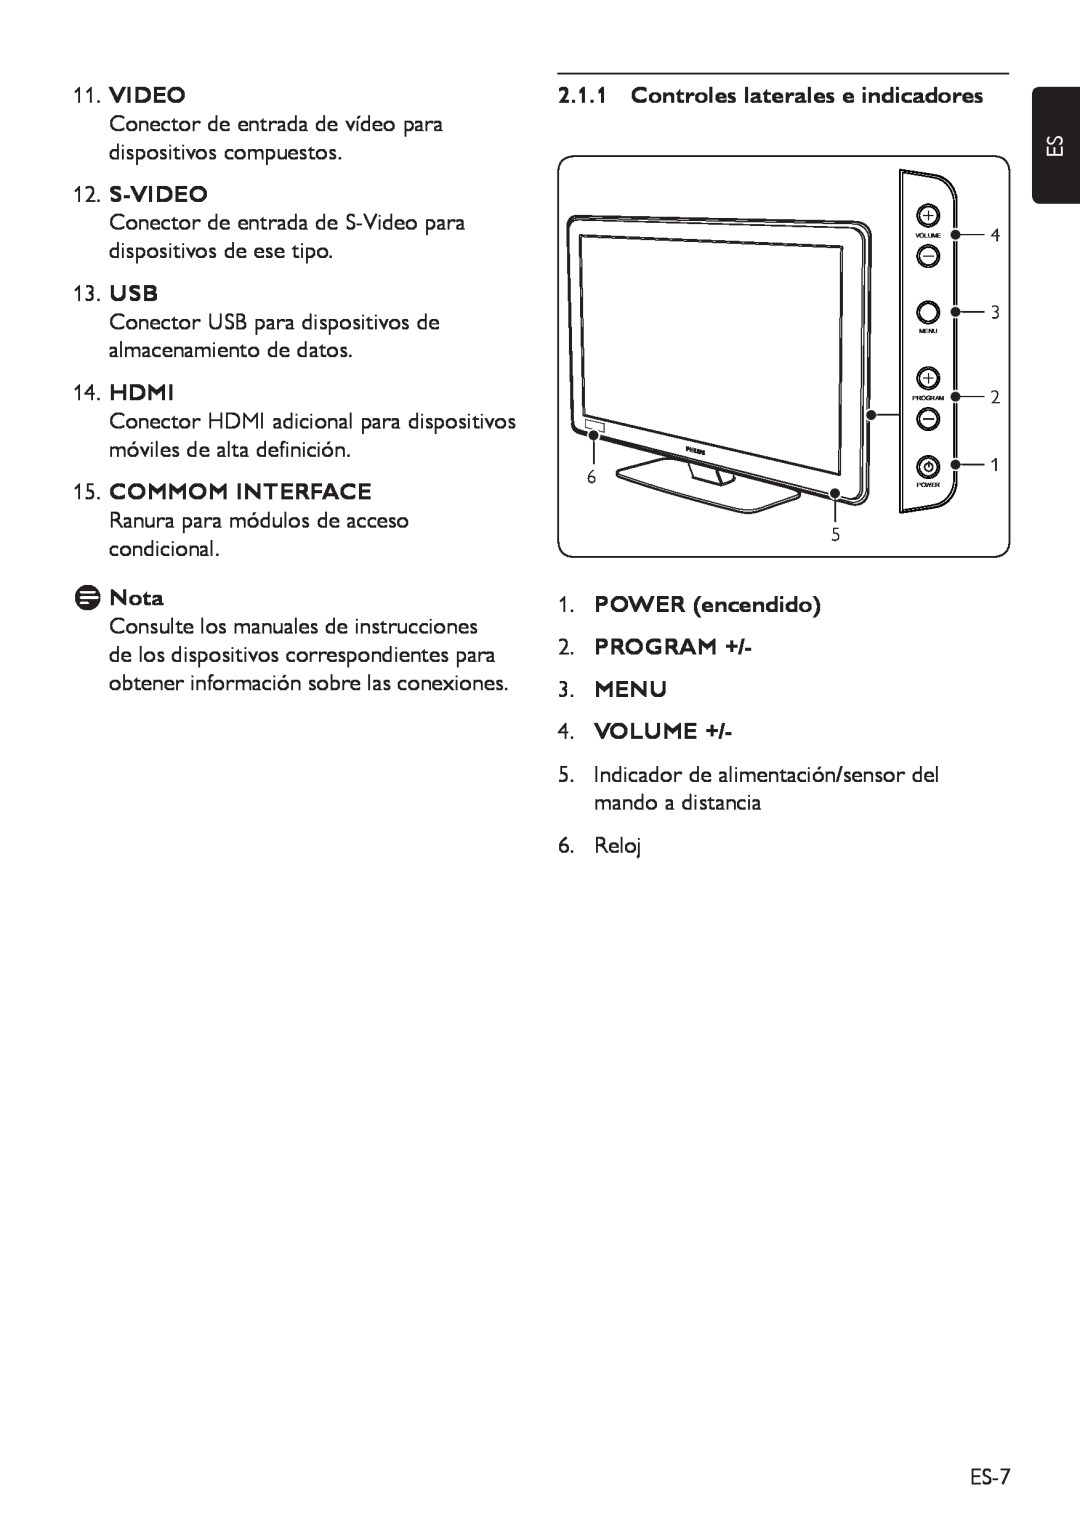 Philips DFU-DEC2008 manual S-Video, 13.USB, Hdmi, DDNota, Controles laterales e indicadores 